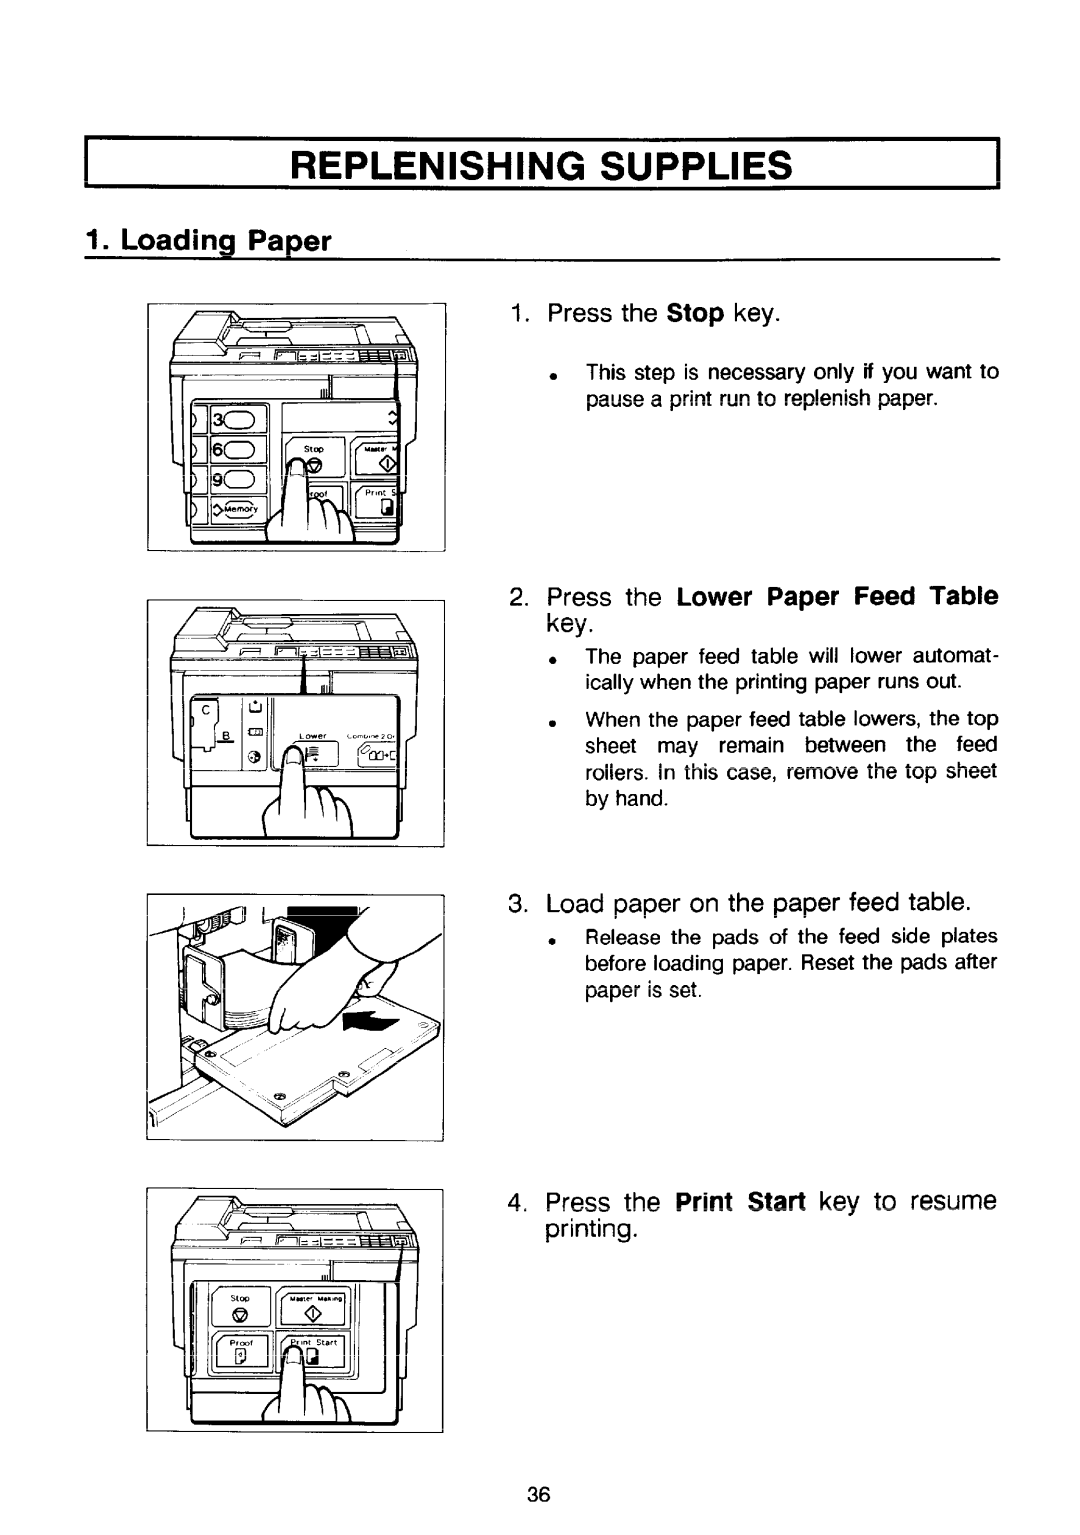 Ricoh PRIPORT VT2130 manual Replenishing Supplies, Loadina Pa~er, Press the Lower Paper Feed Table key 